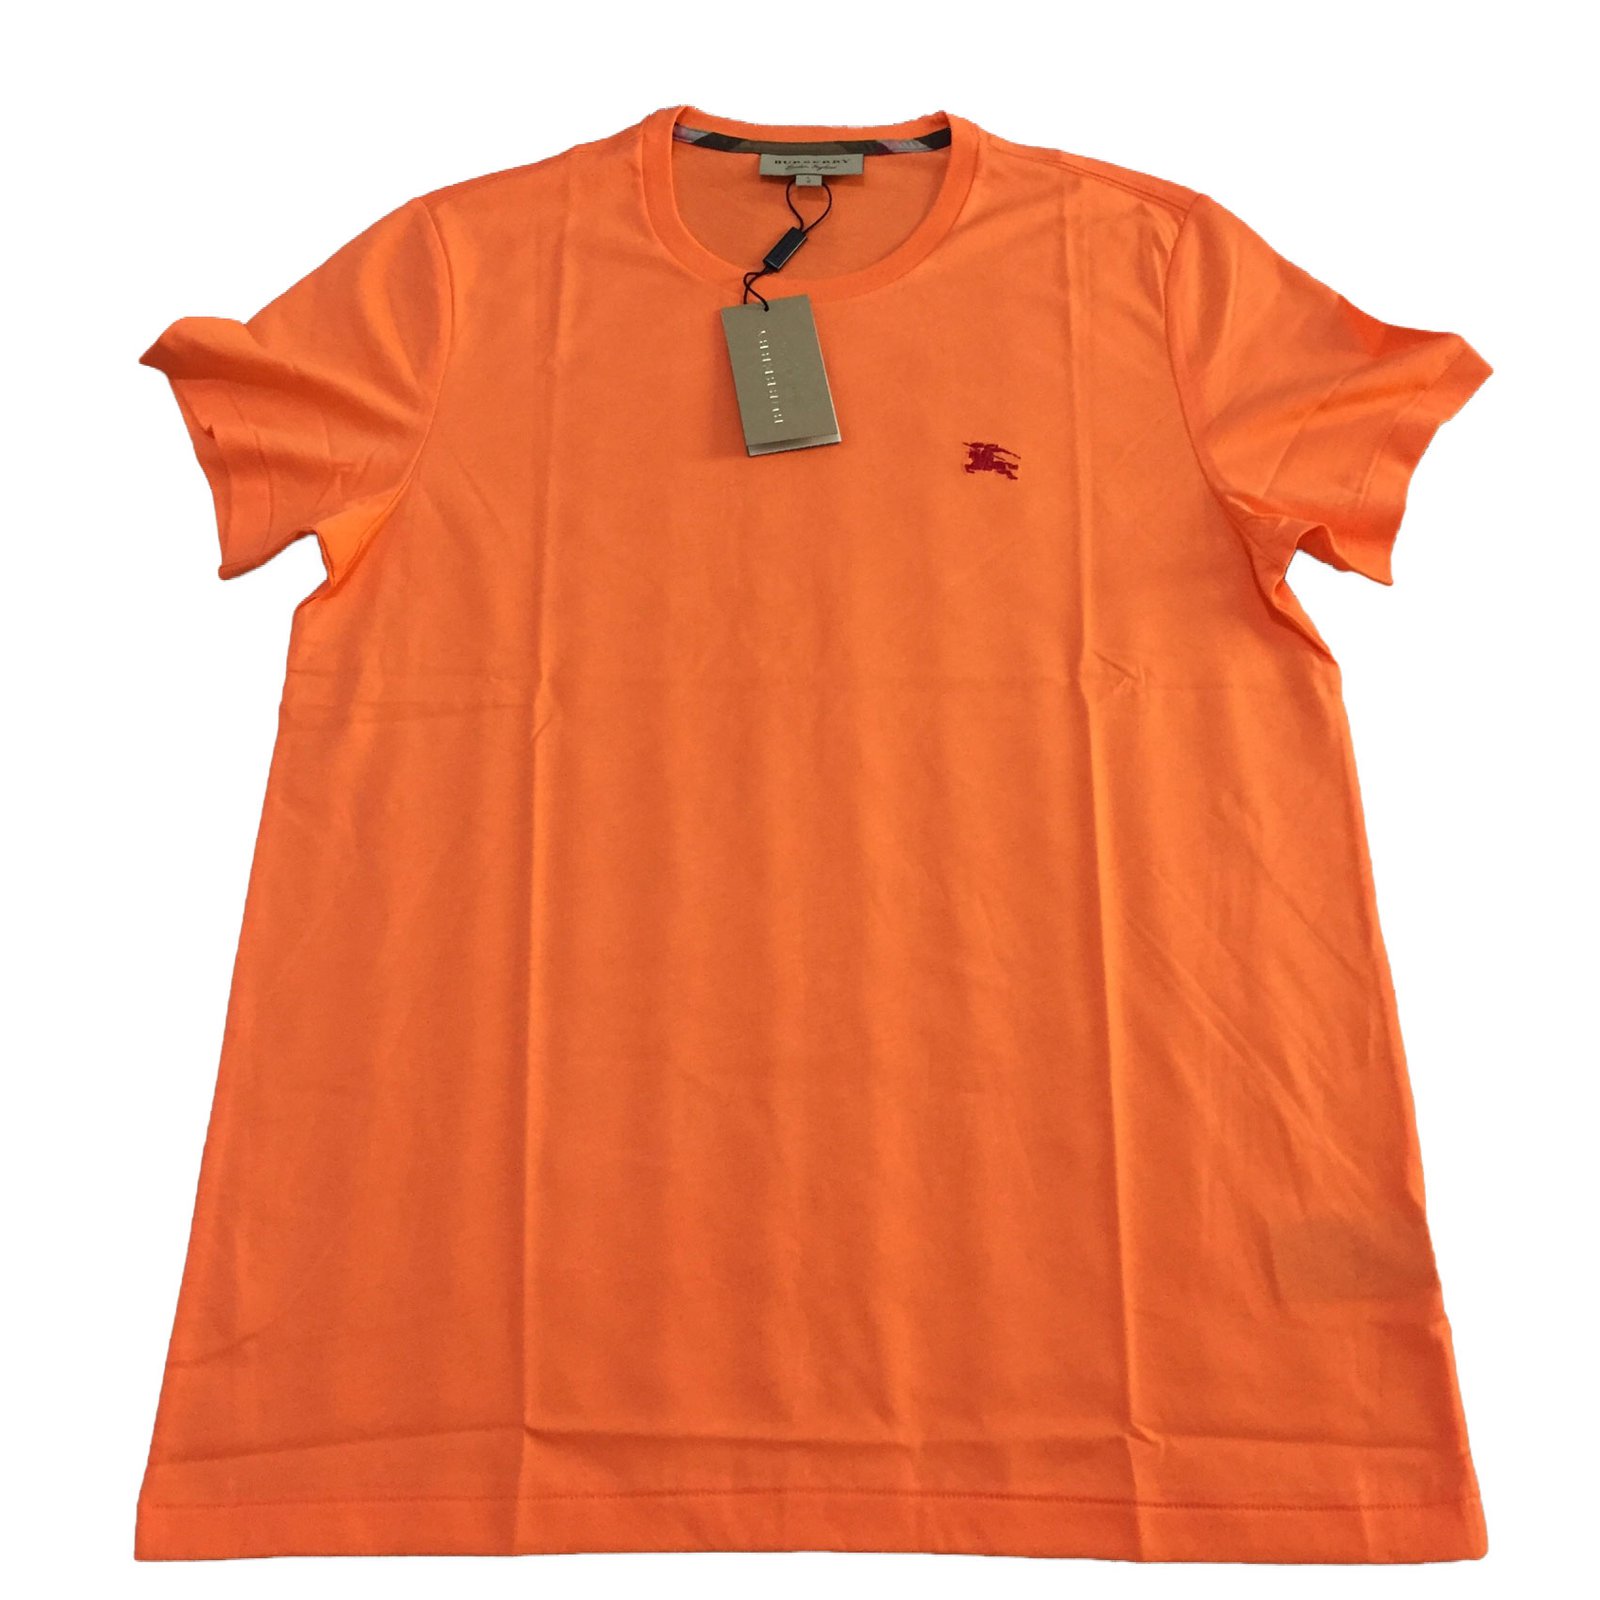 T-shirt Burberry new orange 2018